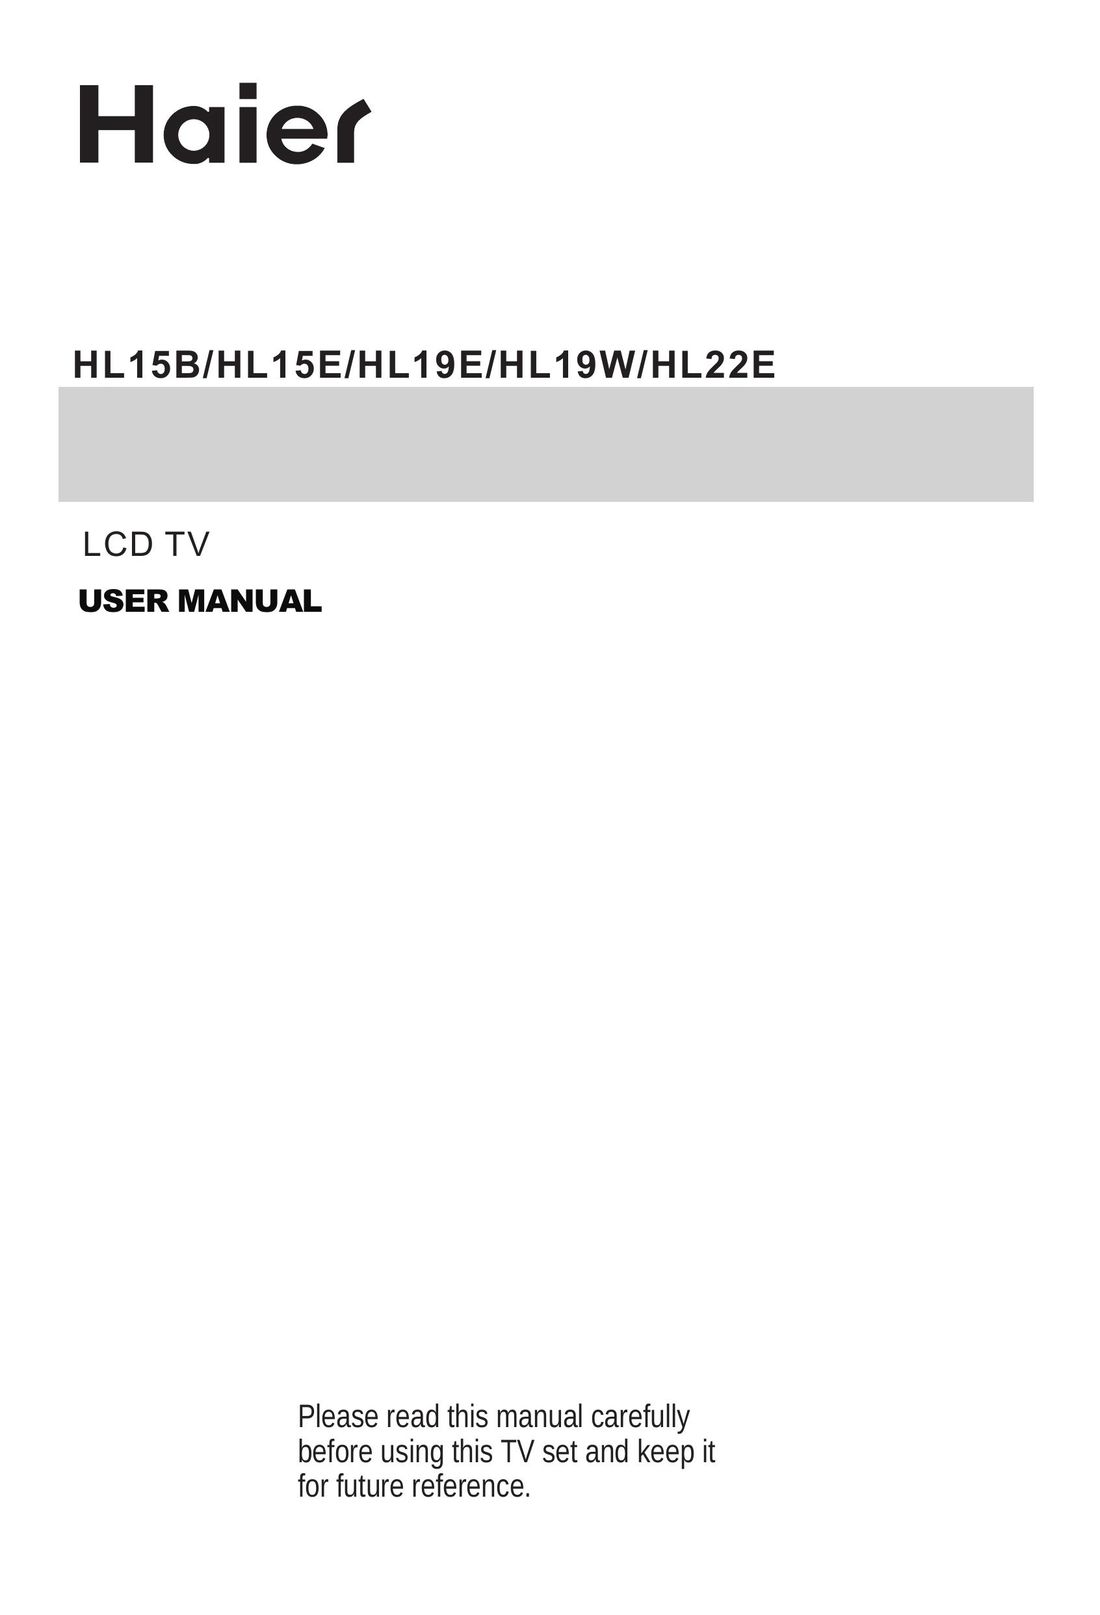 Haier HL22E Flat Panel Television User Manual